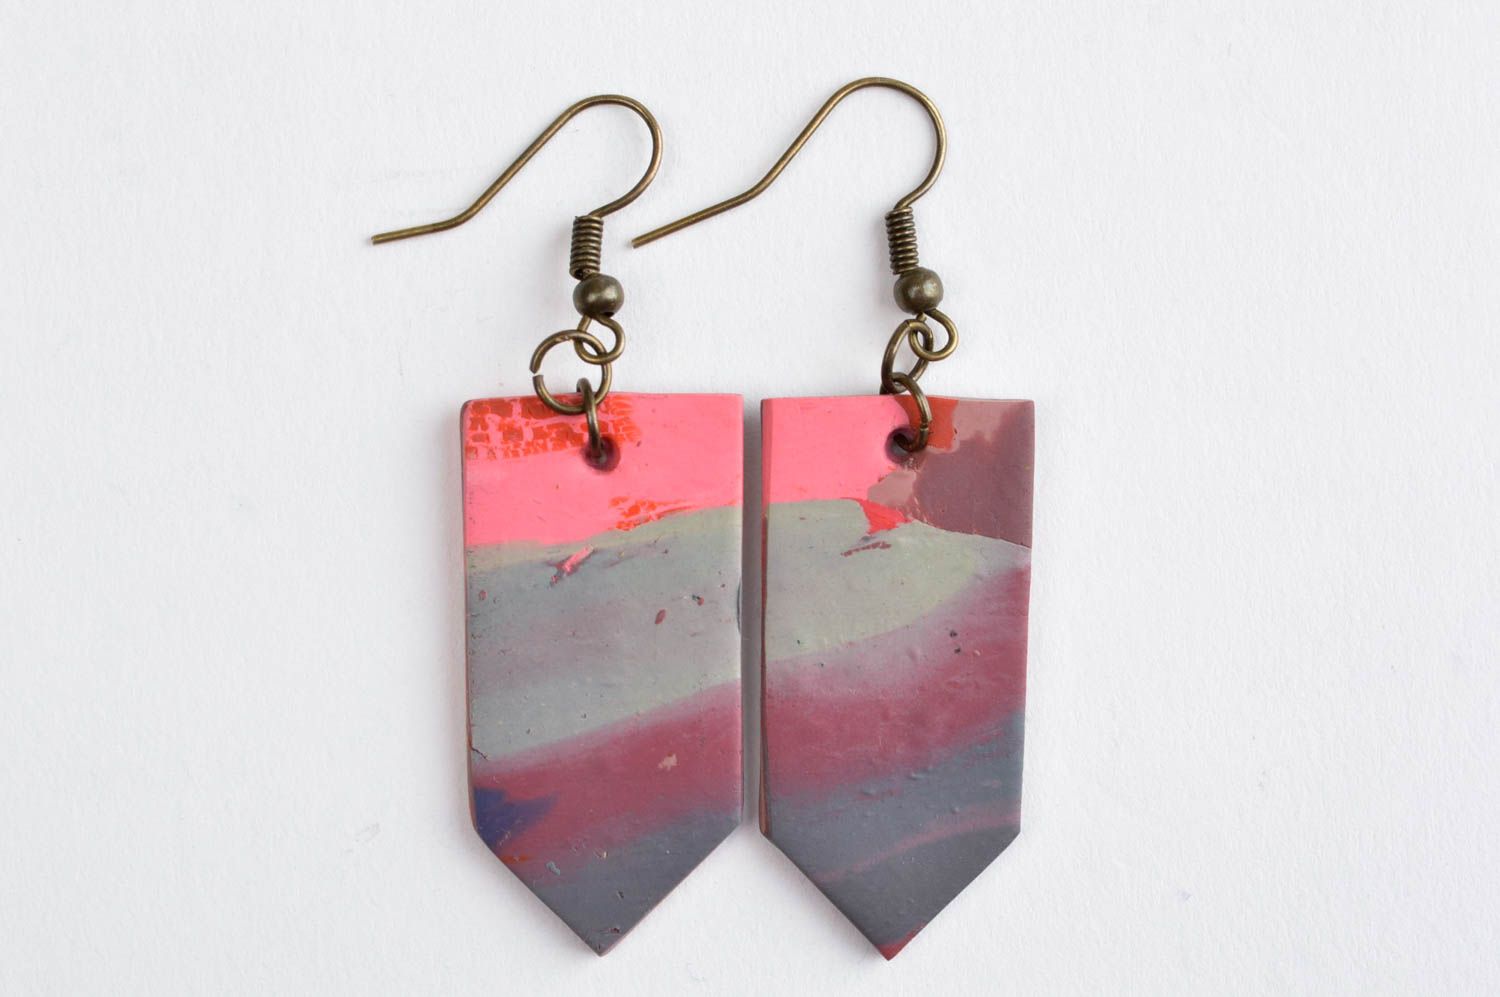 Colorful handmade plastic earrings beautiful jewellery polymer clay ideas photo 2